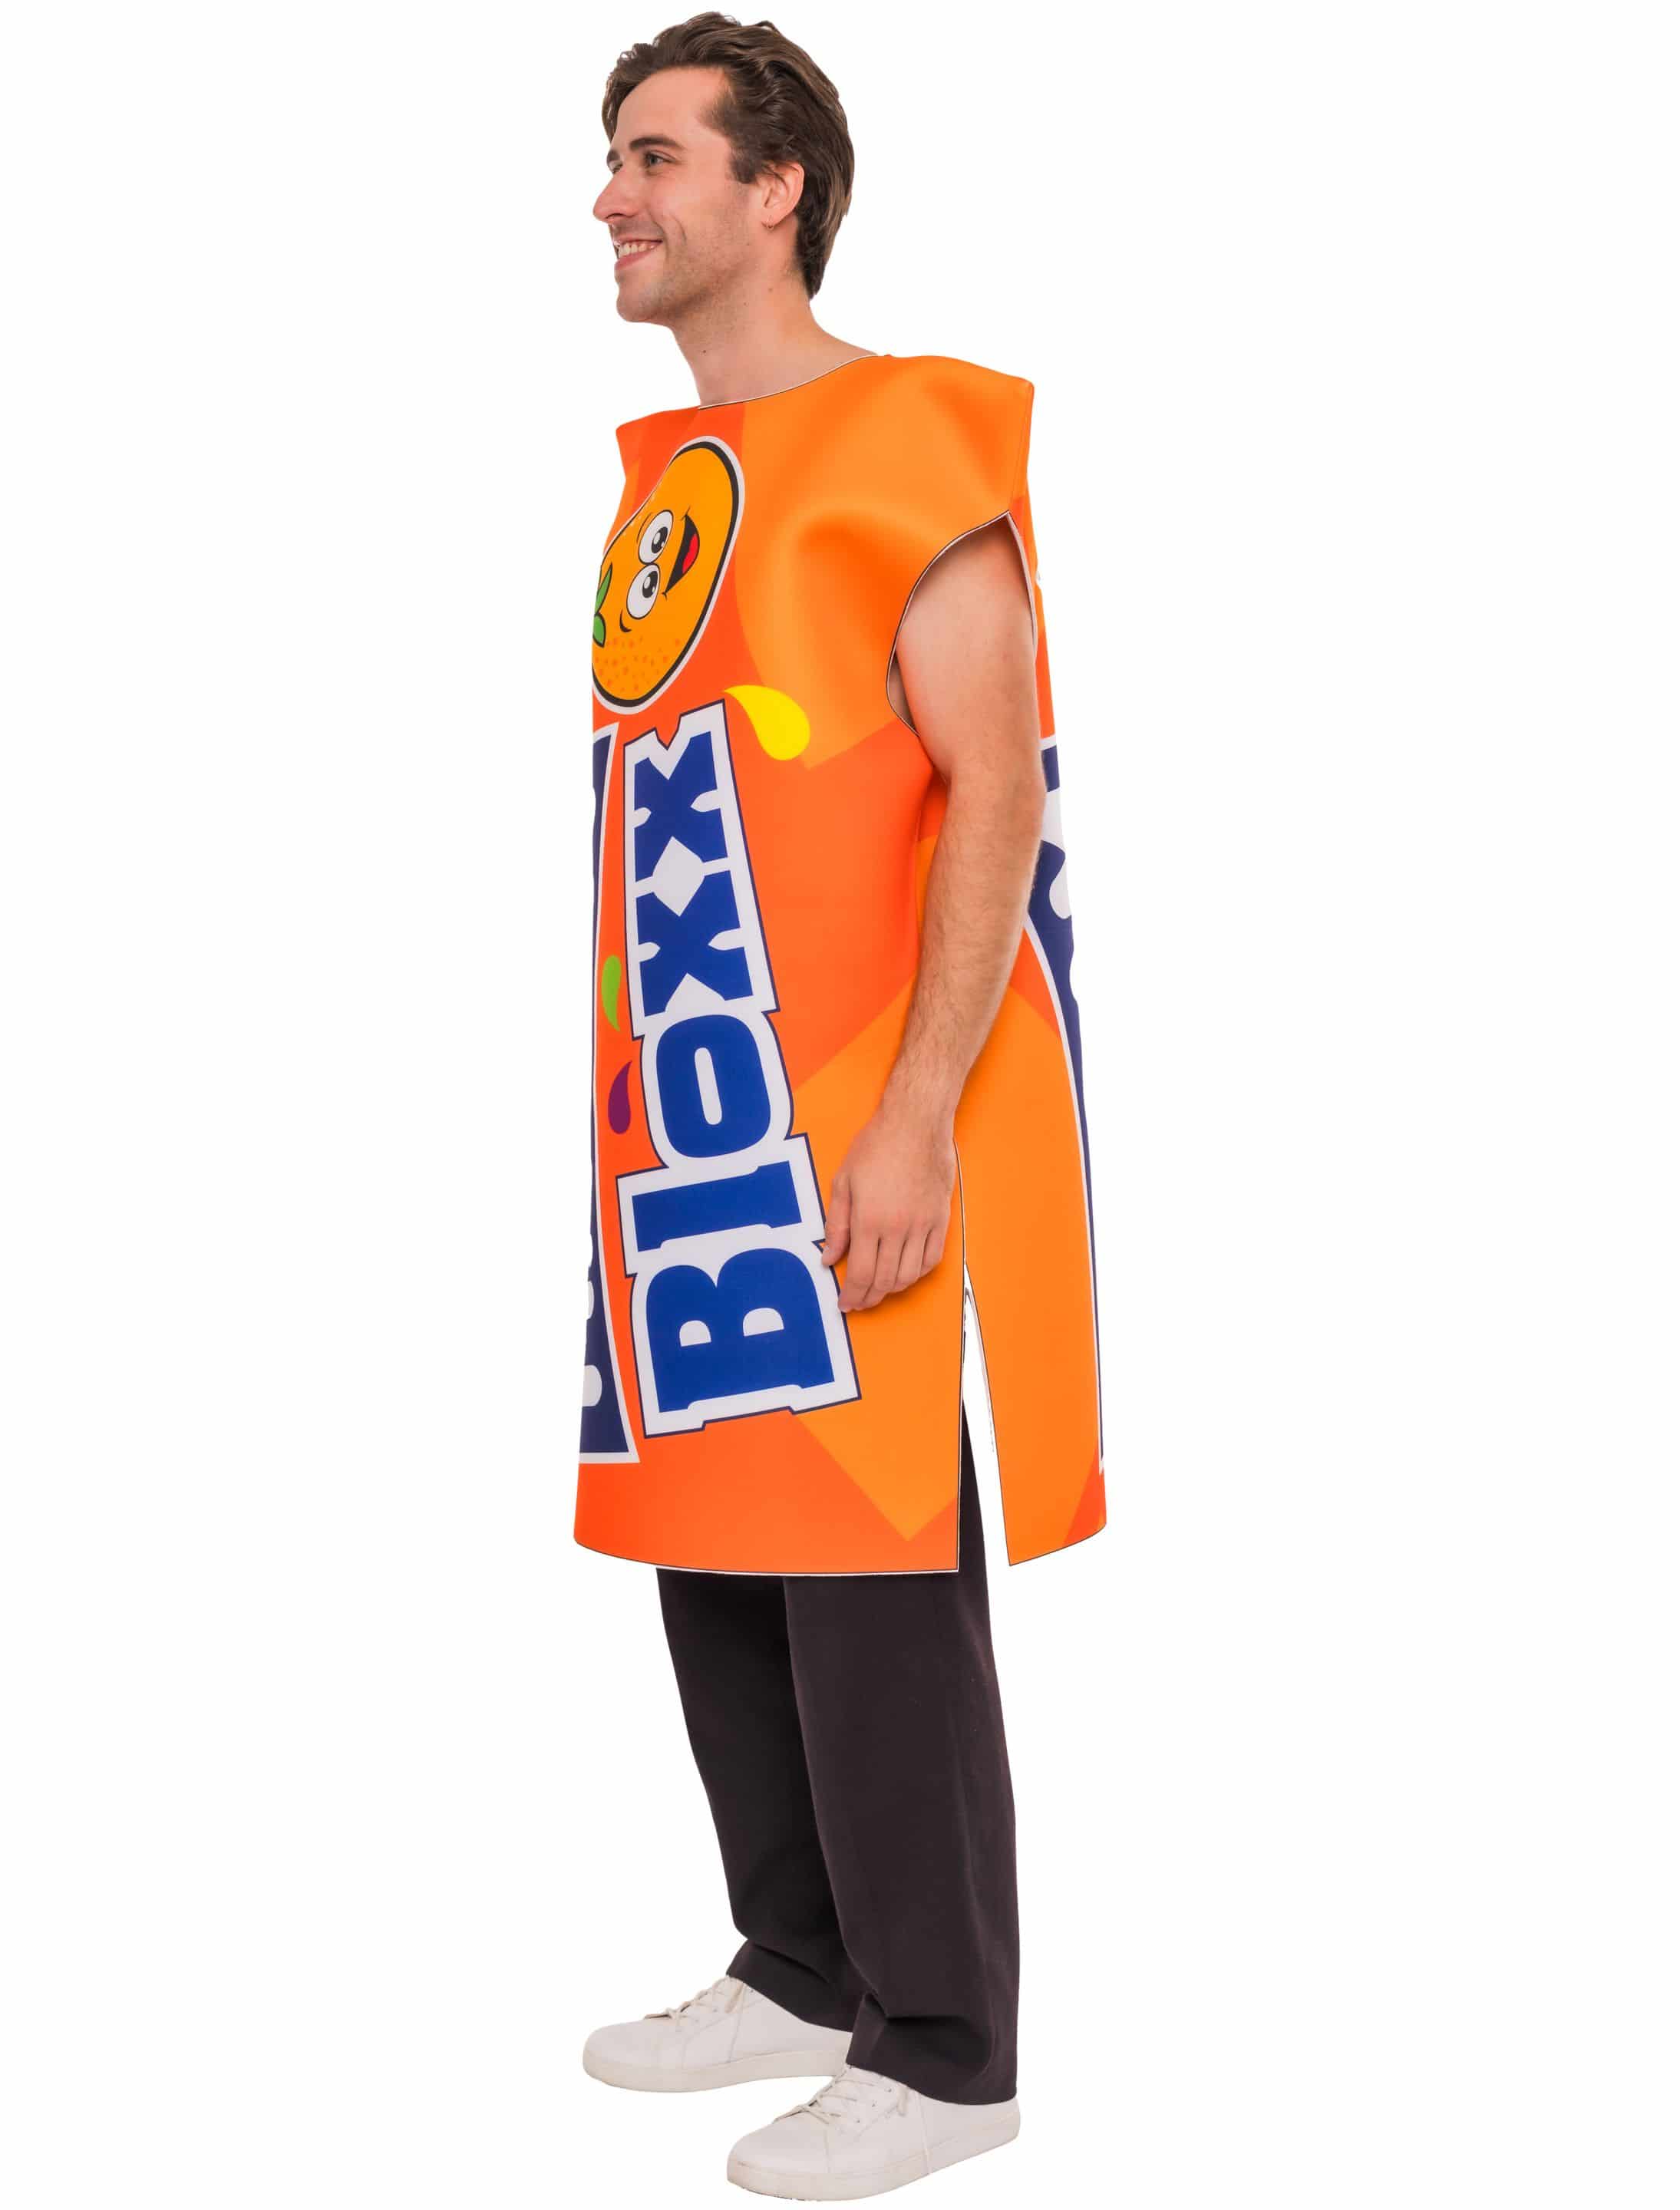 Kostüm MAOAM orange one size